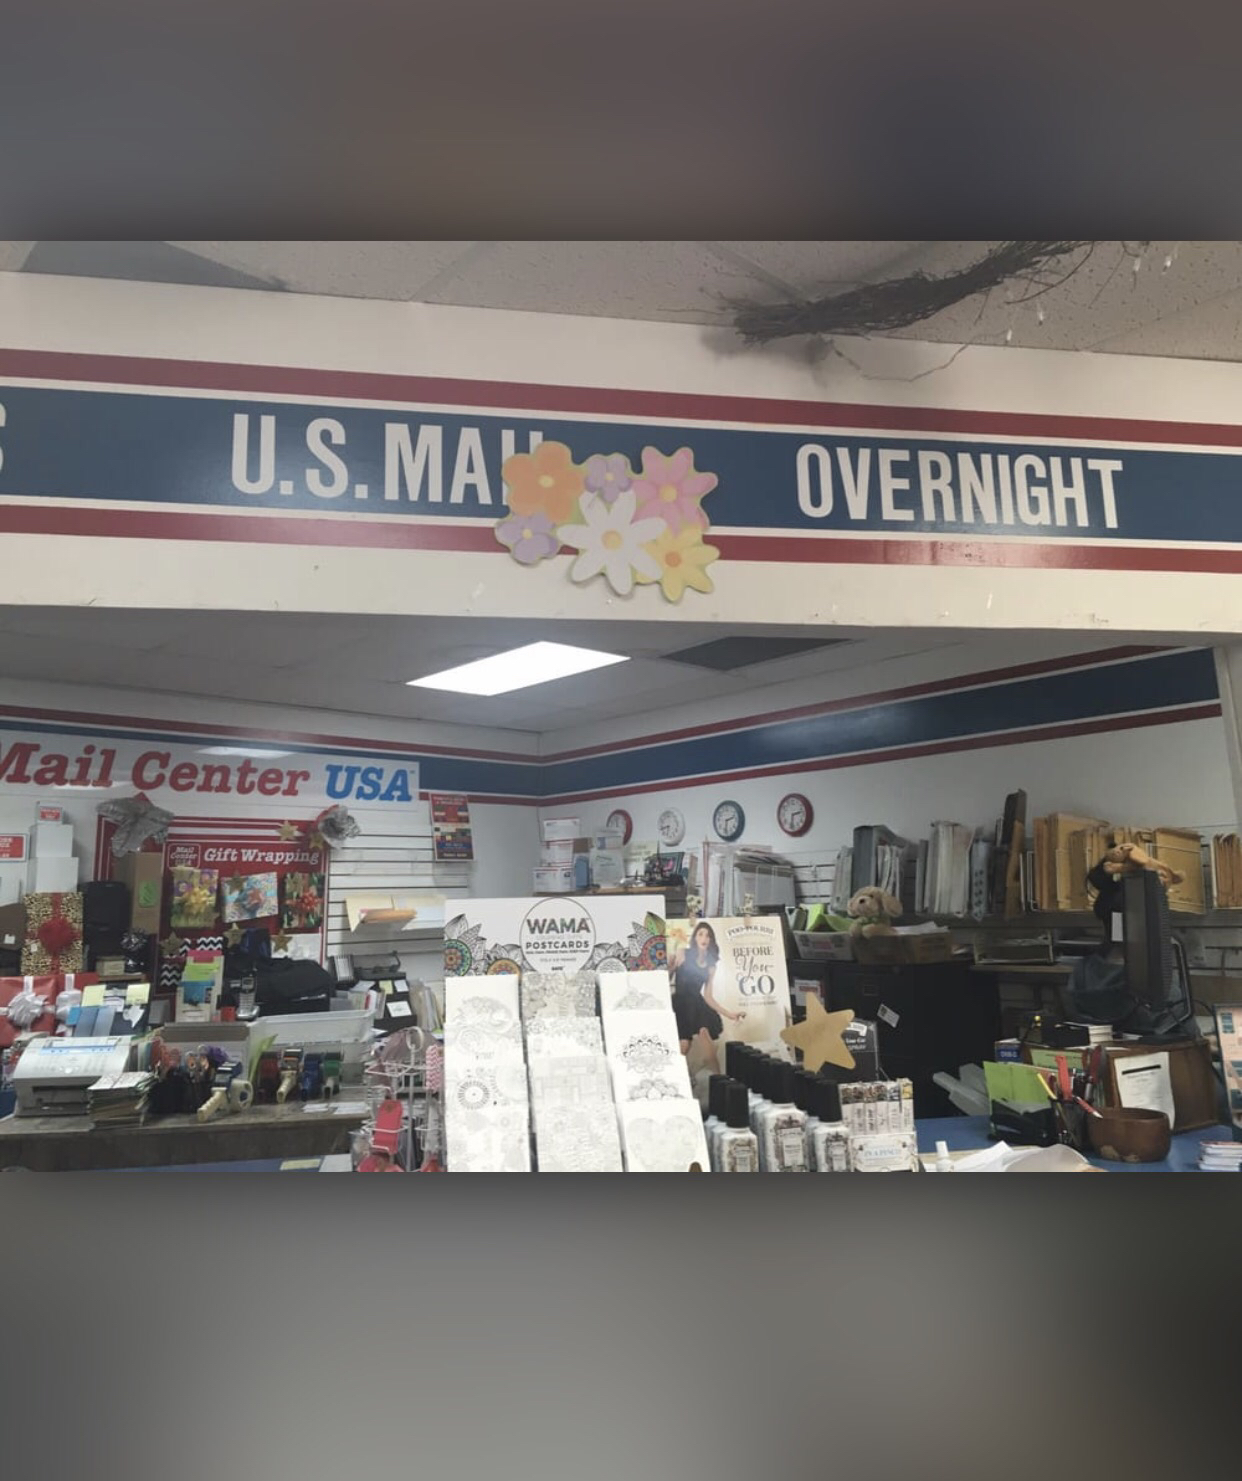 Mail Center USA